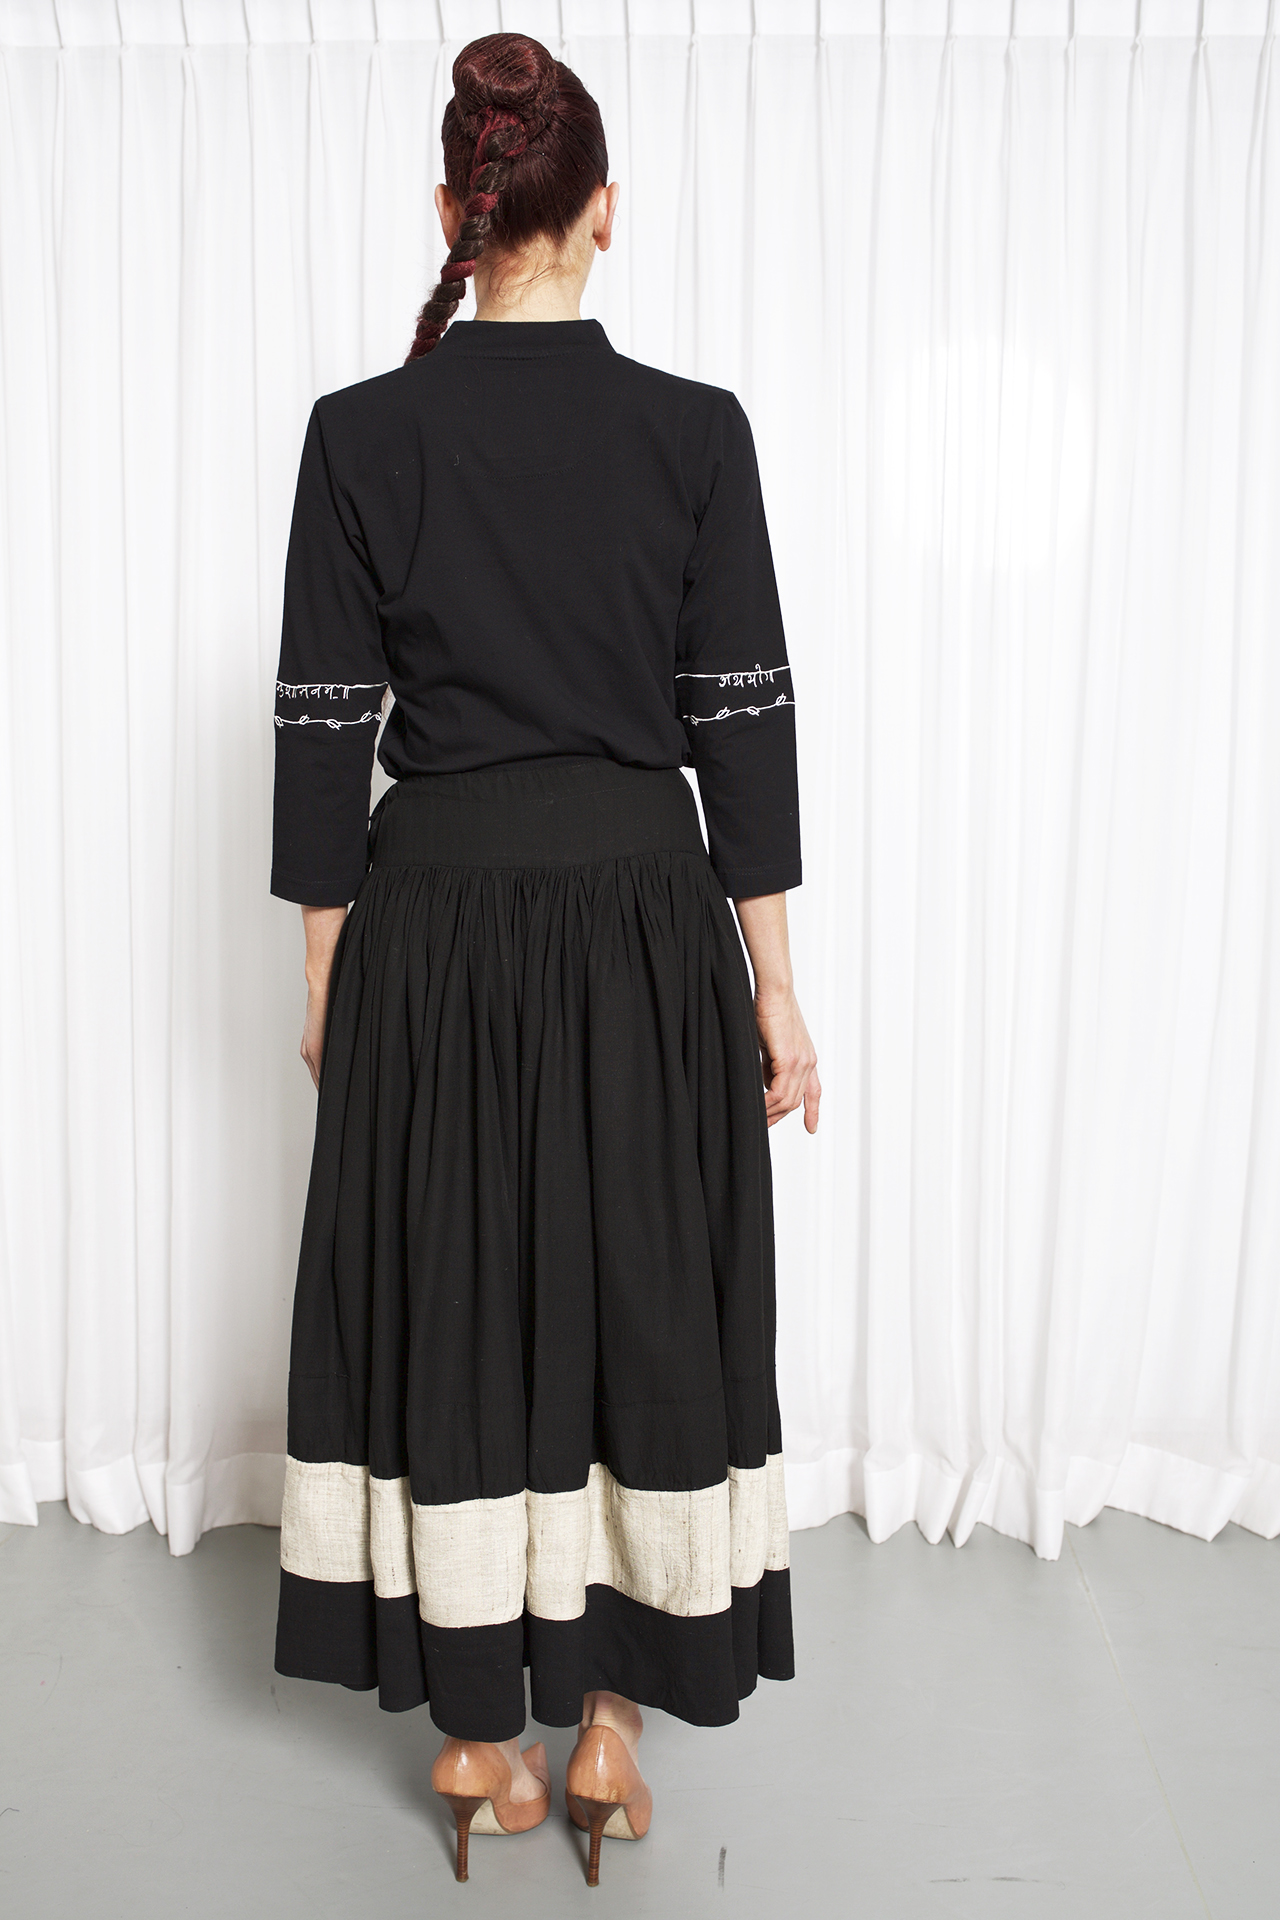 Line Skirt in Pure Peace (Ahimsa) Silk | Mandali Mendrilla